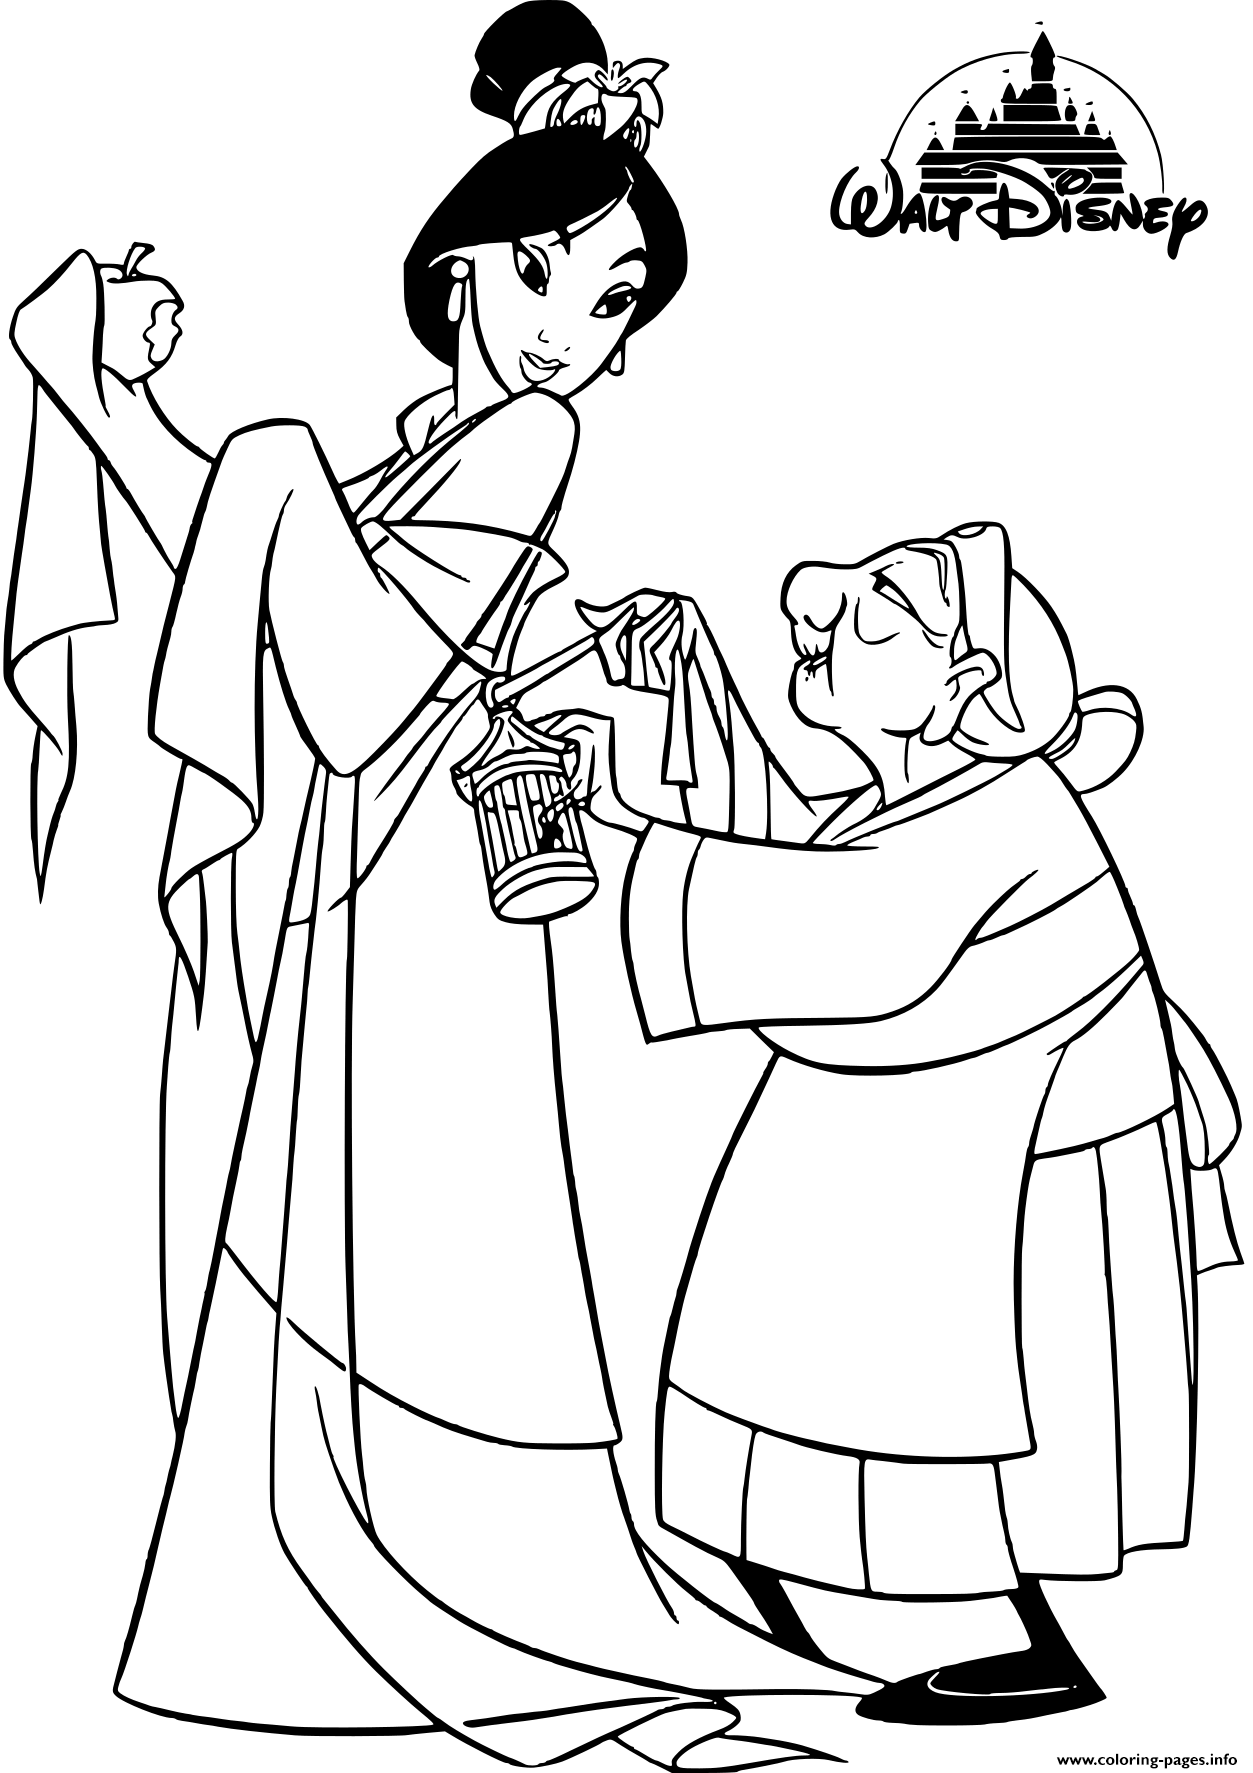 Disney Princess Mulan coloring